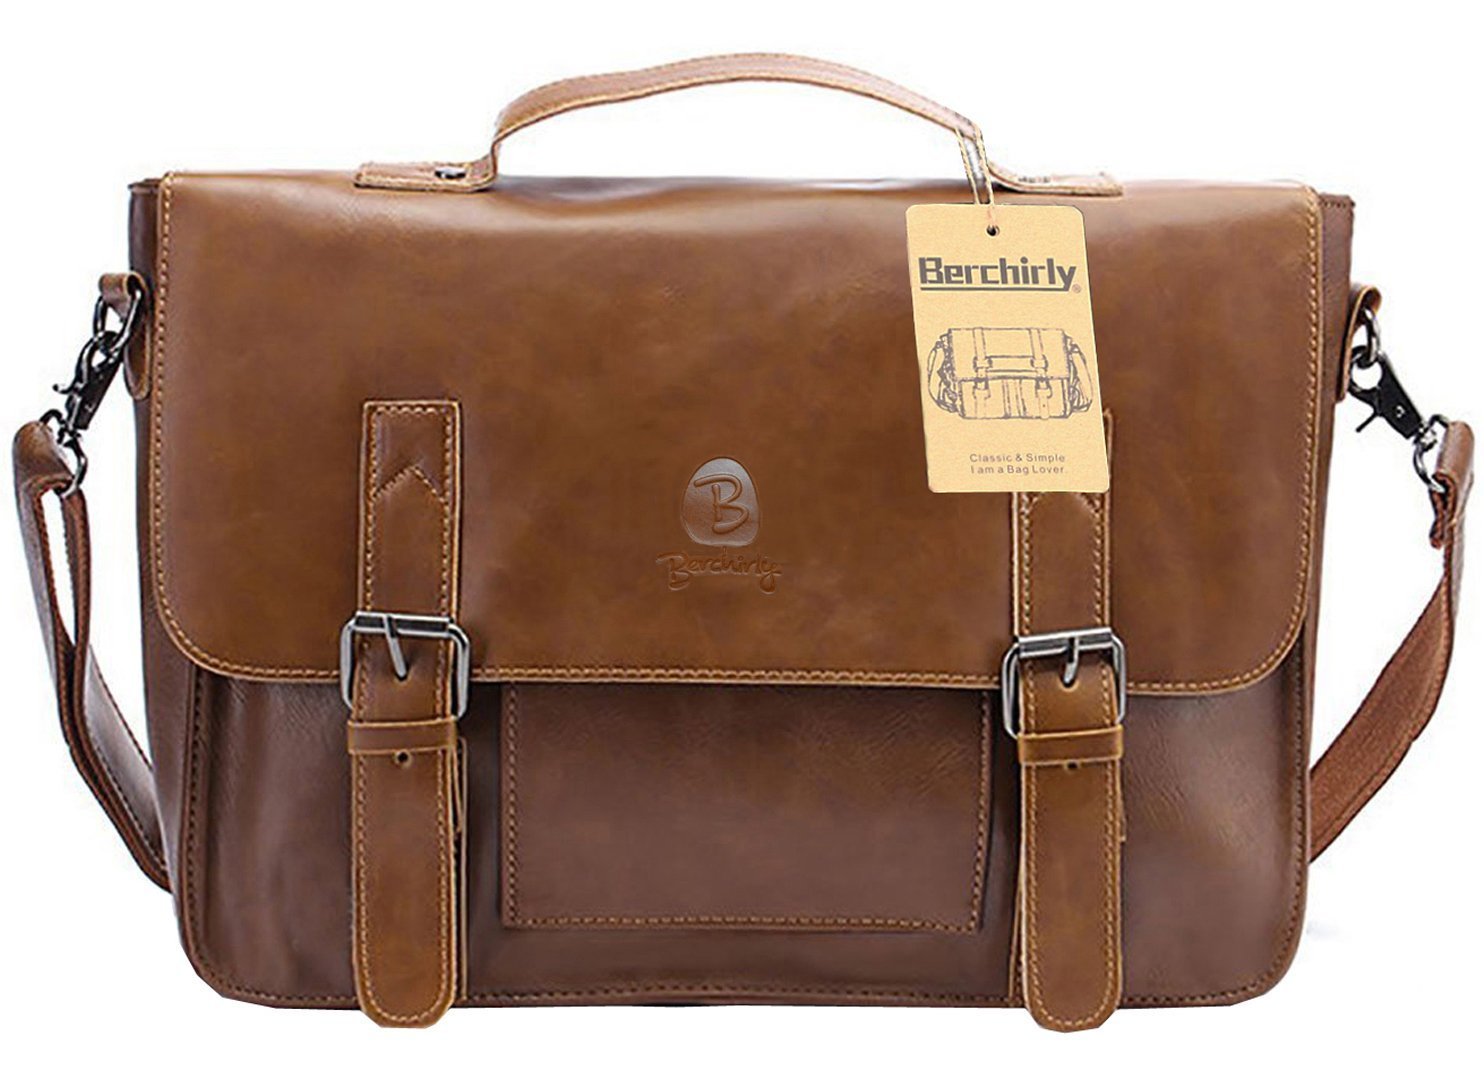 Amazon: Vintage Leather Briefcase, Berchirly PU Leather Shoulder Messenger Bag Just $27.59